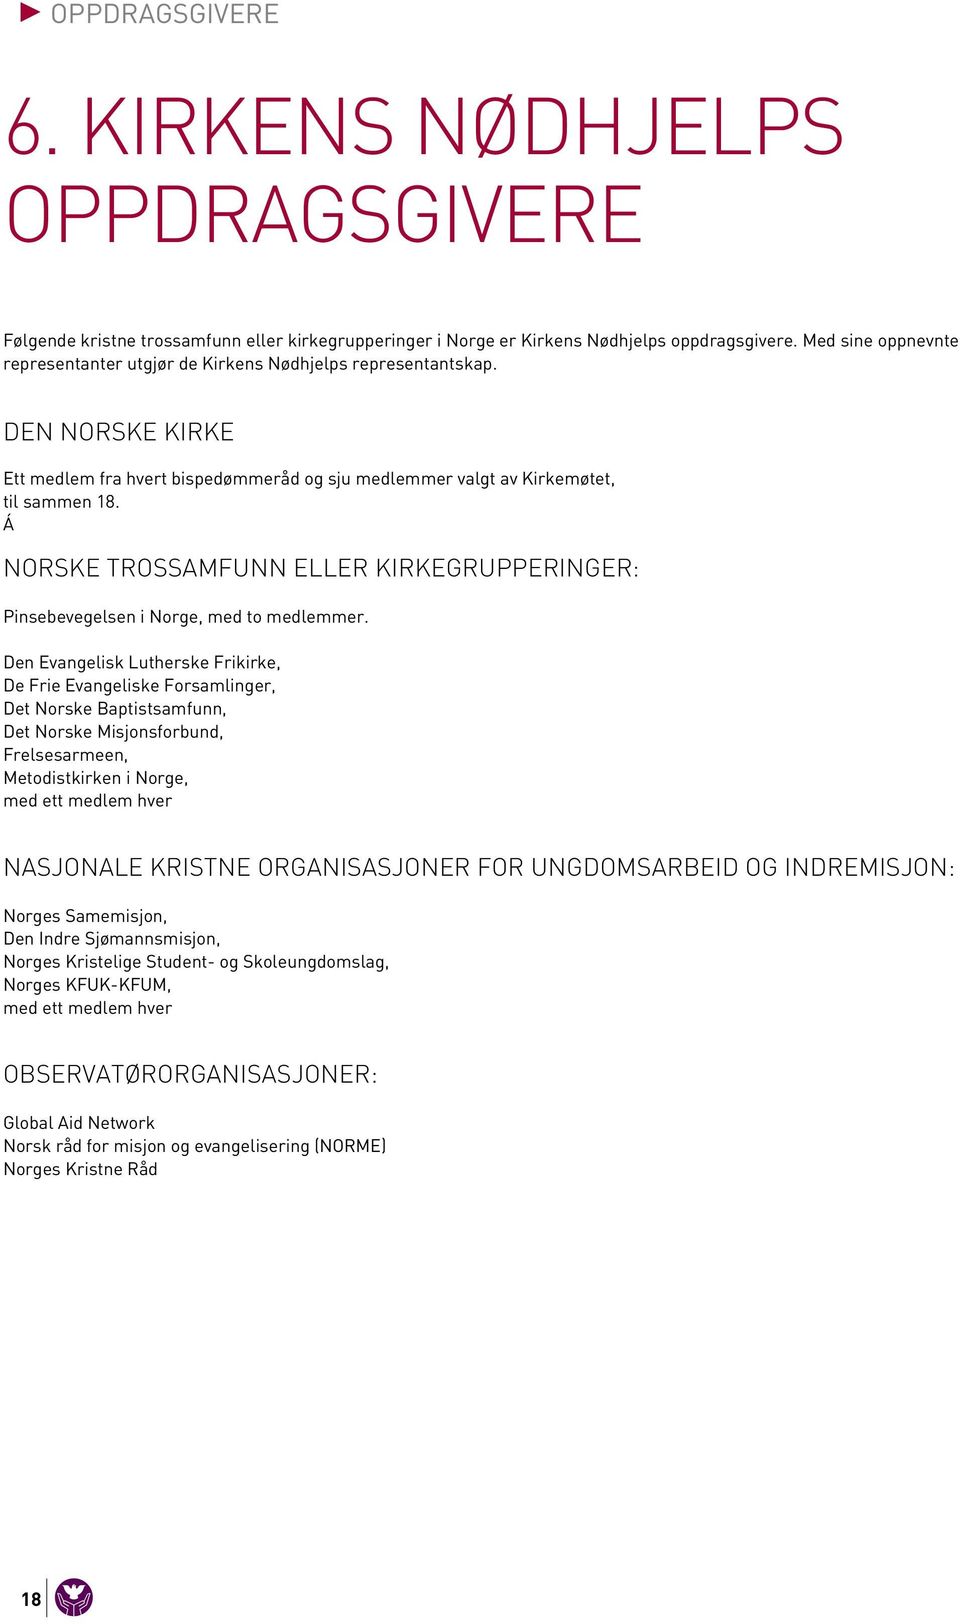 Norske trossamfunn eller kirkegrupperinger: Pinsebevegelsen i Norge, med to medlemmer.